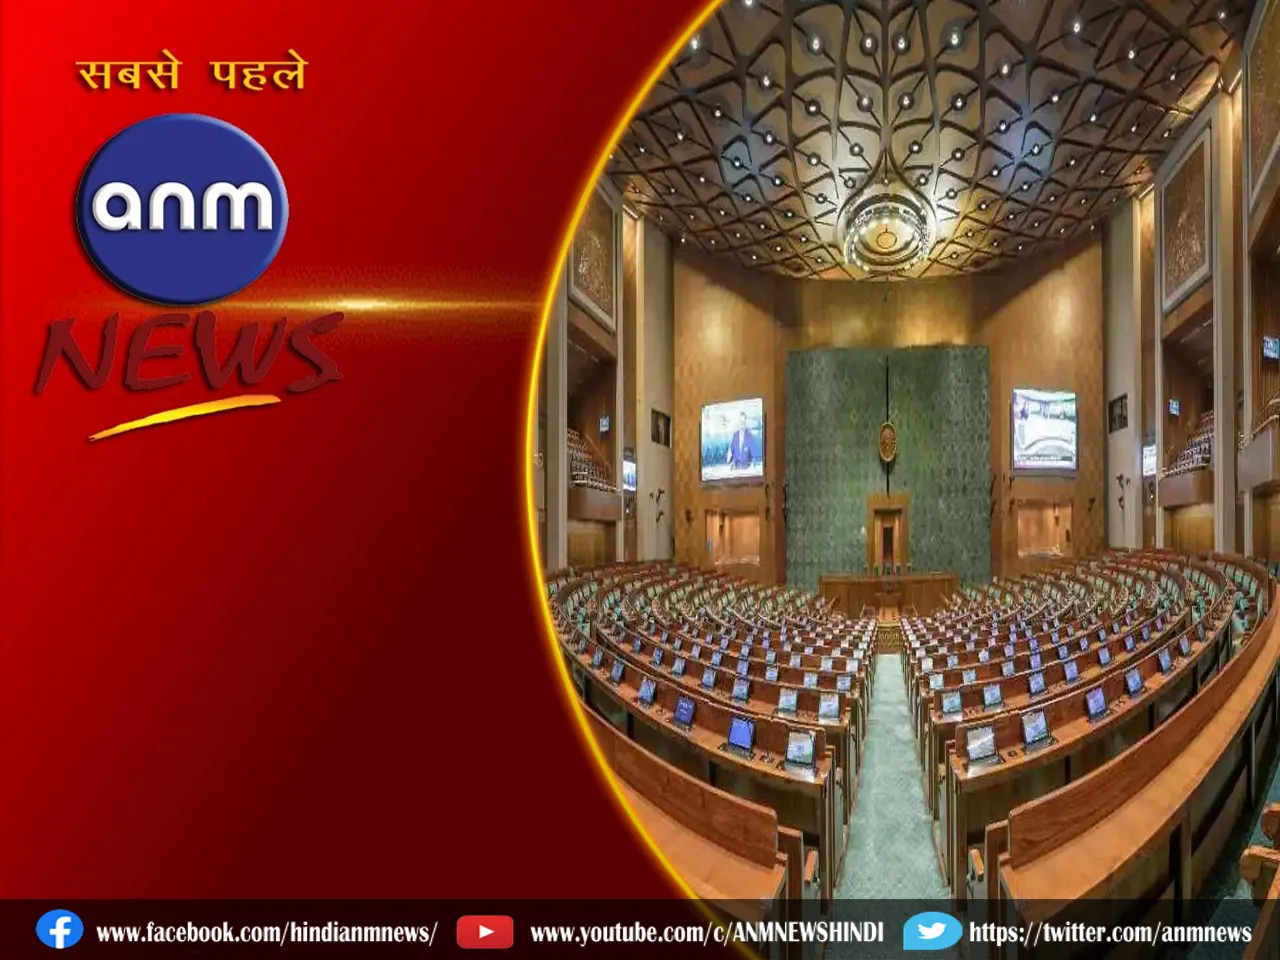 New Parliament